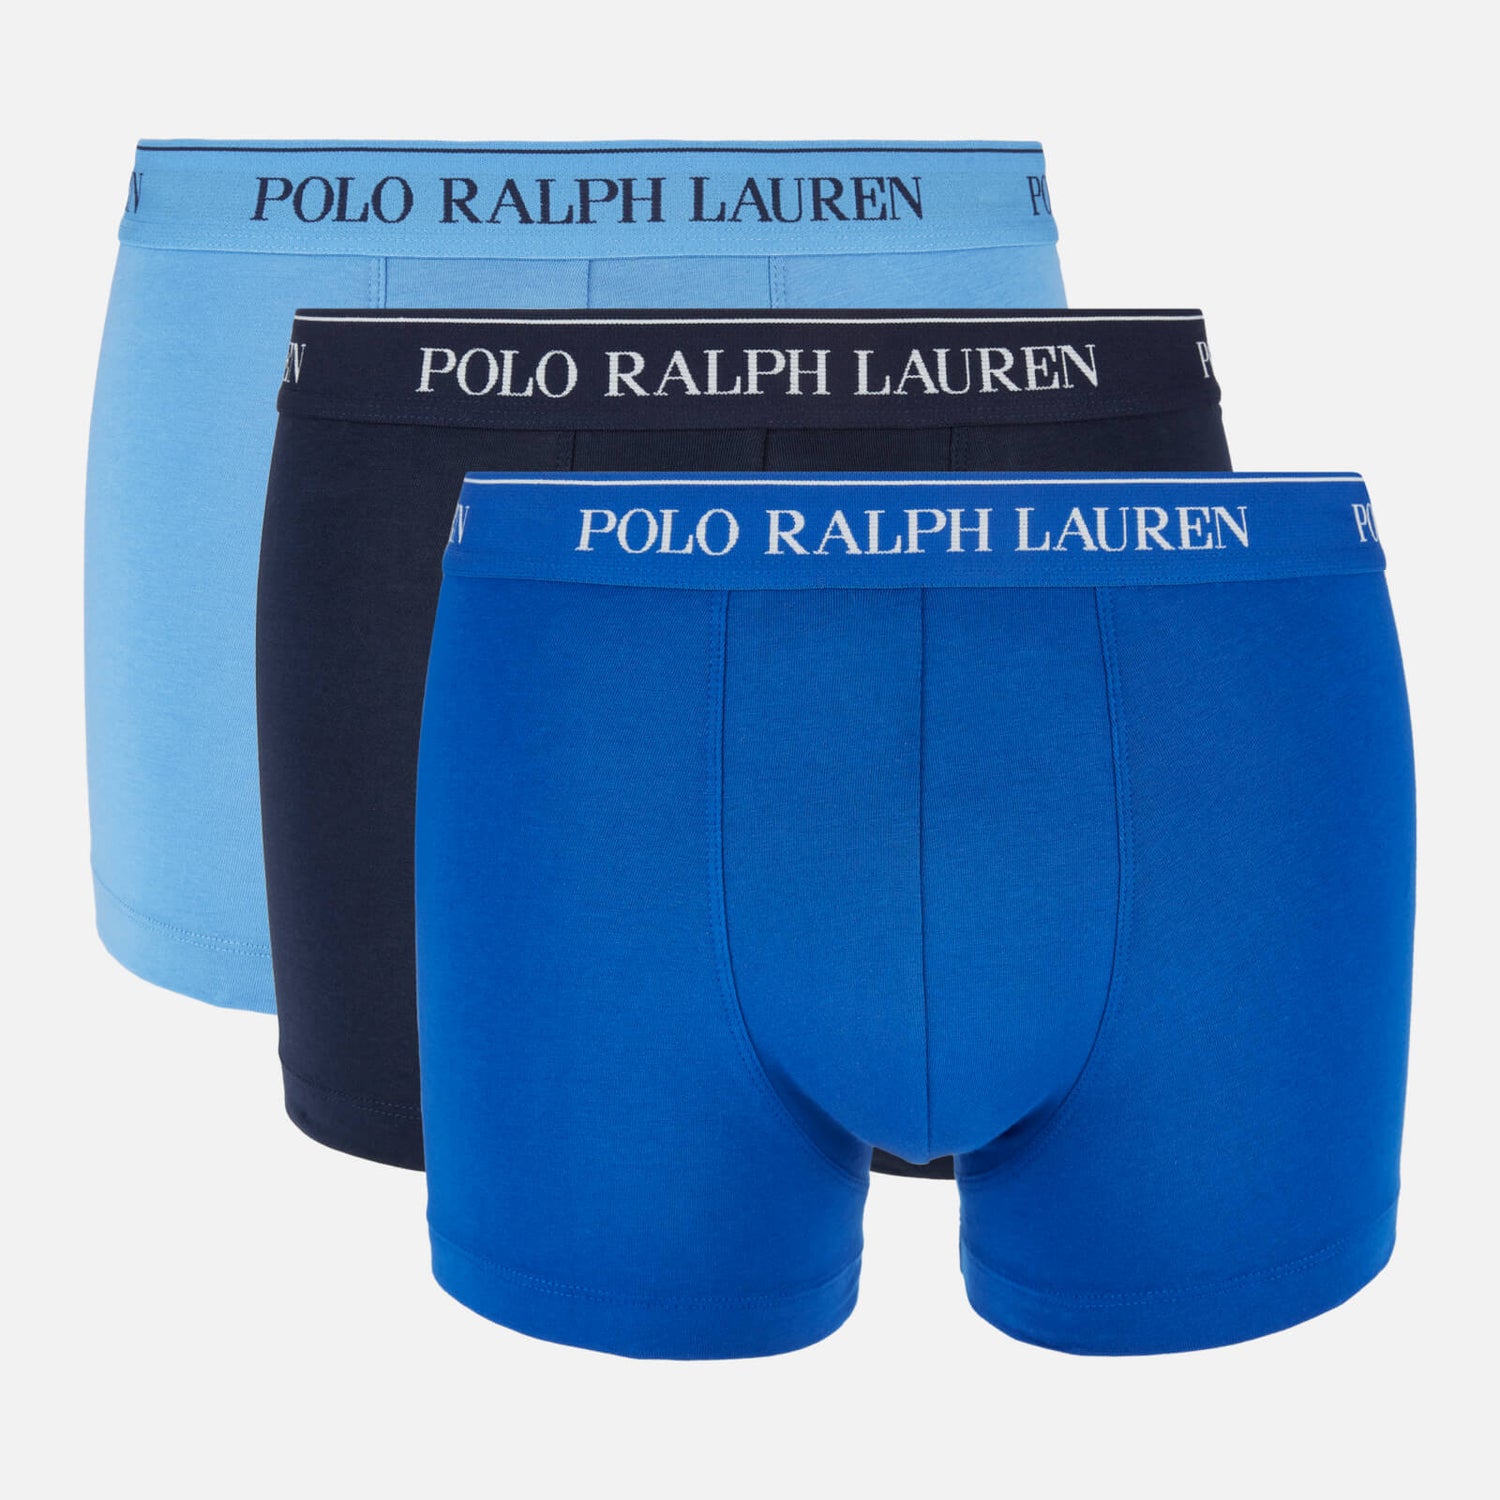 Polo Ralph Lauren 3er-Pack Boxer Briefs - Cruise Navy/Saphire Star/Bermuda Blue - S